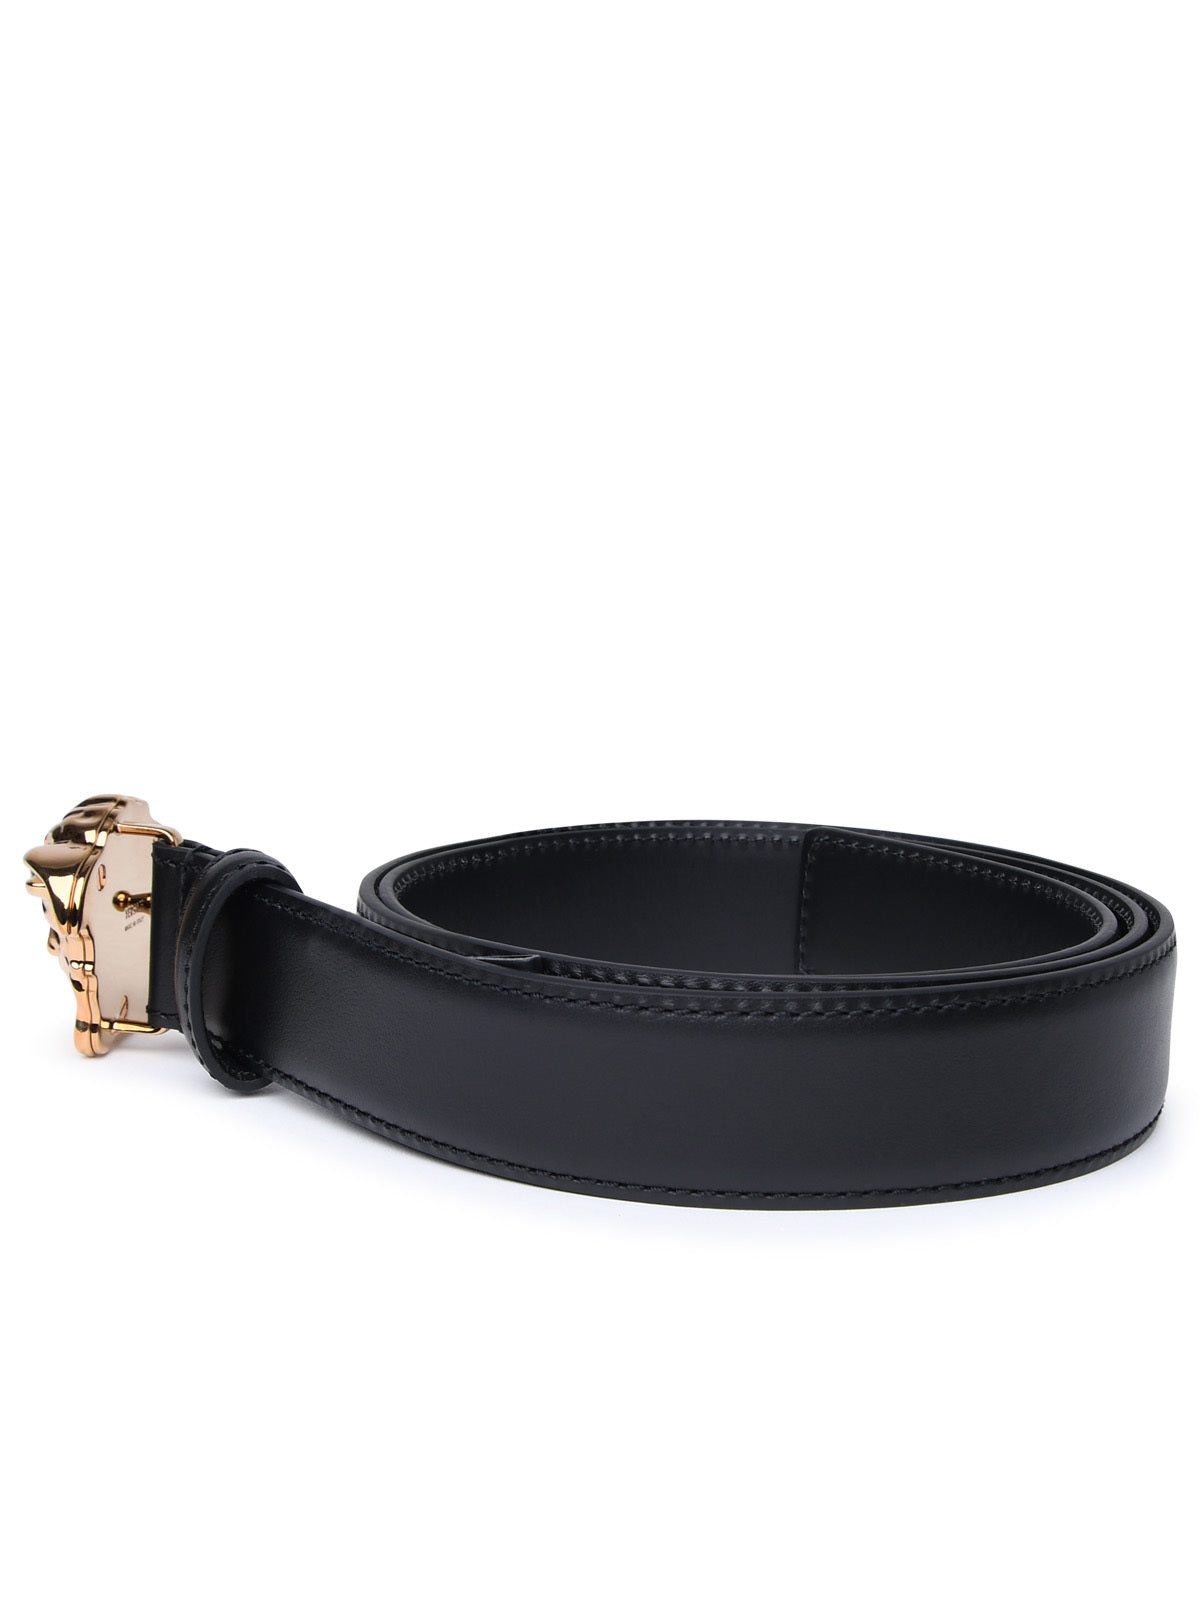 Versace Man Black Leather Belt - 2